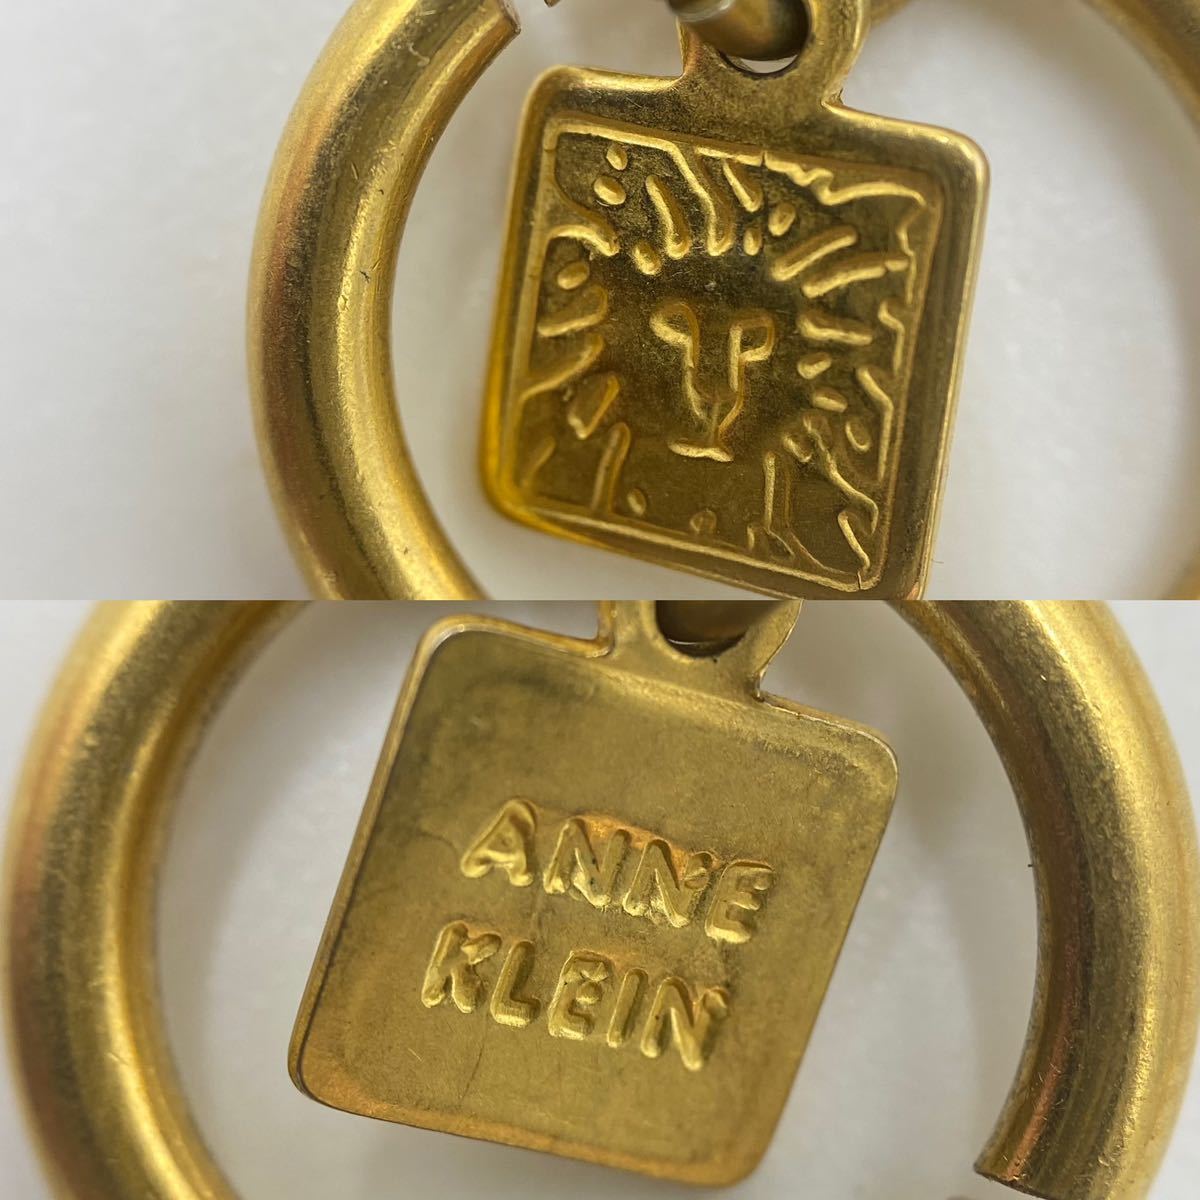 ANNE KLEIN アンクライン ネックレス ゴールド アクセサリー P2661 